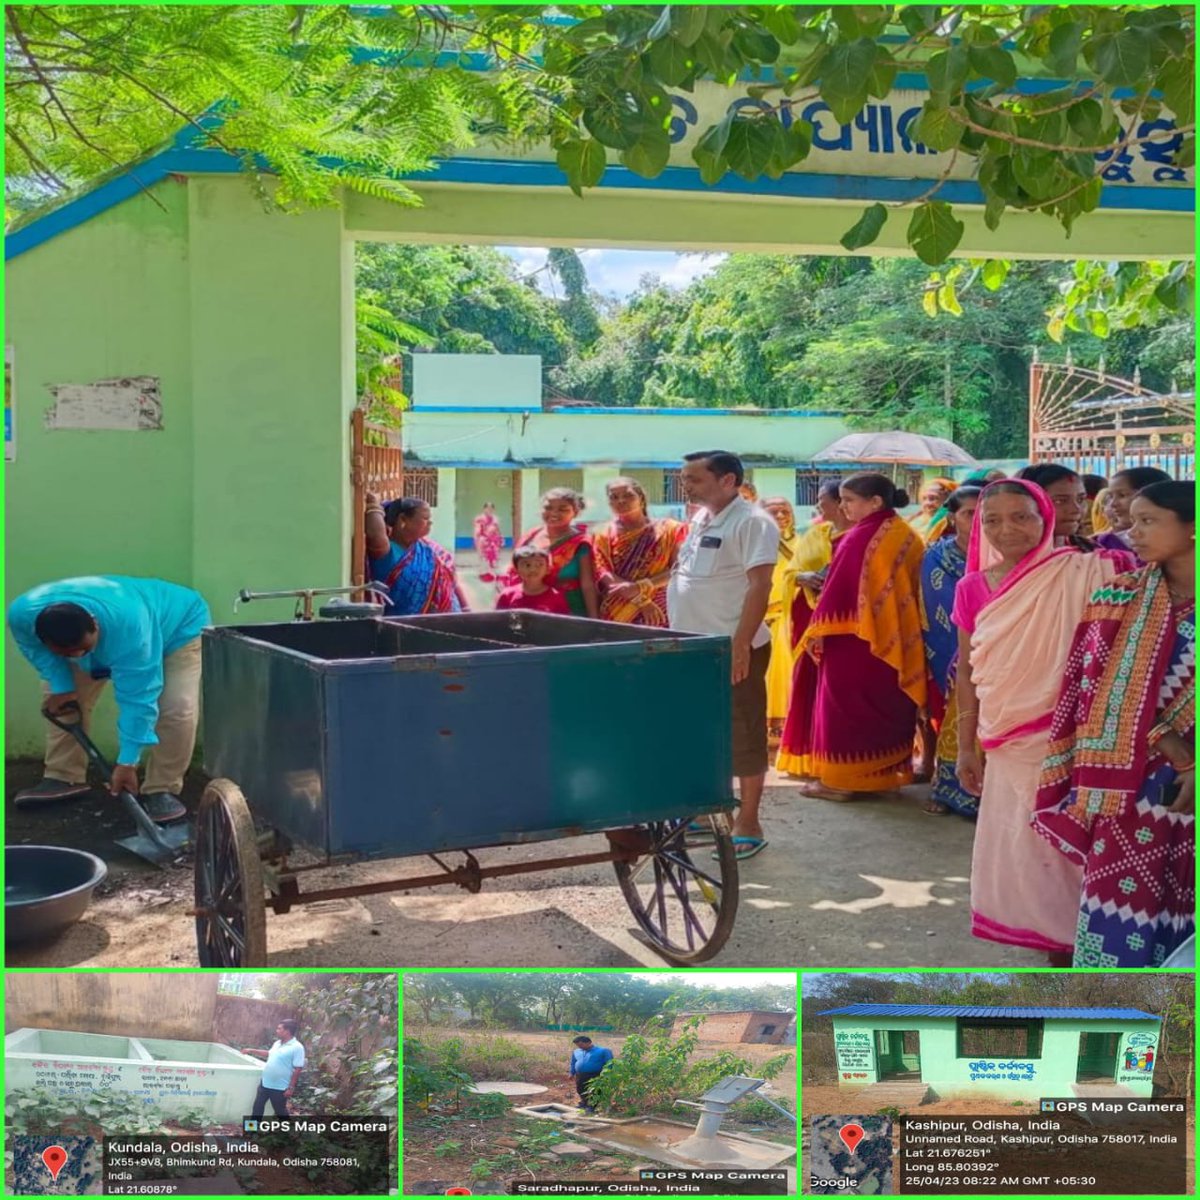 Institutional #sanitation assets constructed in #Patna block #Keonjhar District, Odisha under #SBMG programme for ensuring #ODFPlus status
#WasteManagement #CompostPit #LeachPit #SwachhBharatMissionGrameen 
@CMO_Odisha @MoSarkar5T @DistAdmKeonjhar @swachhbharat @MoJSDDWS